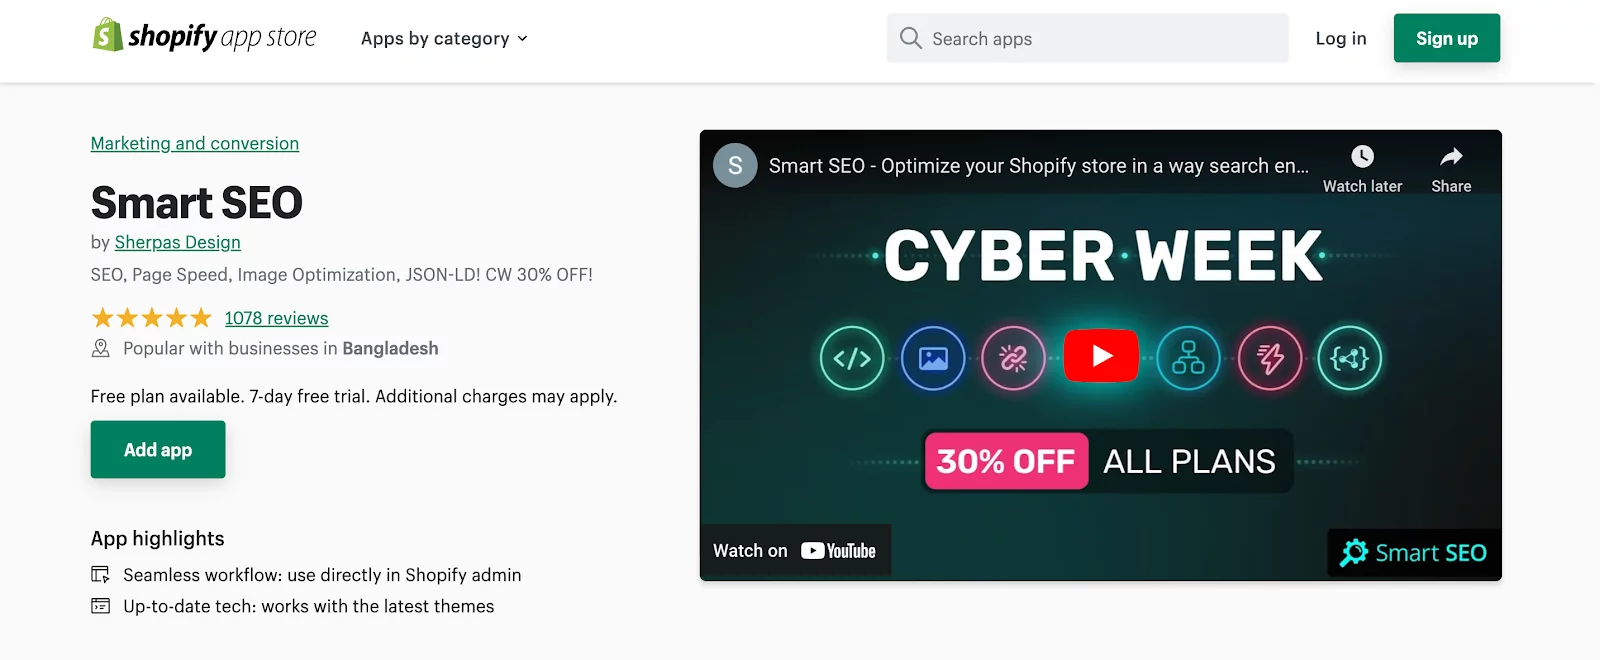 Shopify SEO Apps - Smart SEO